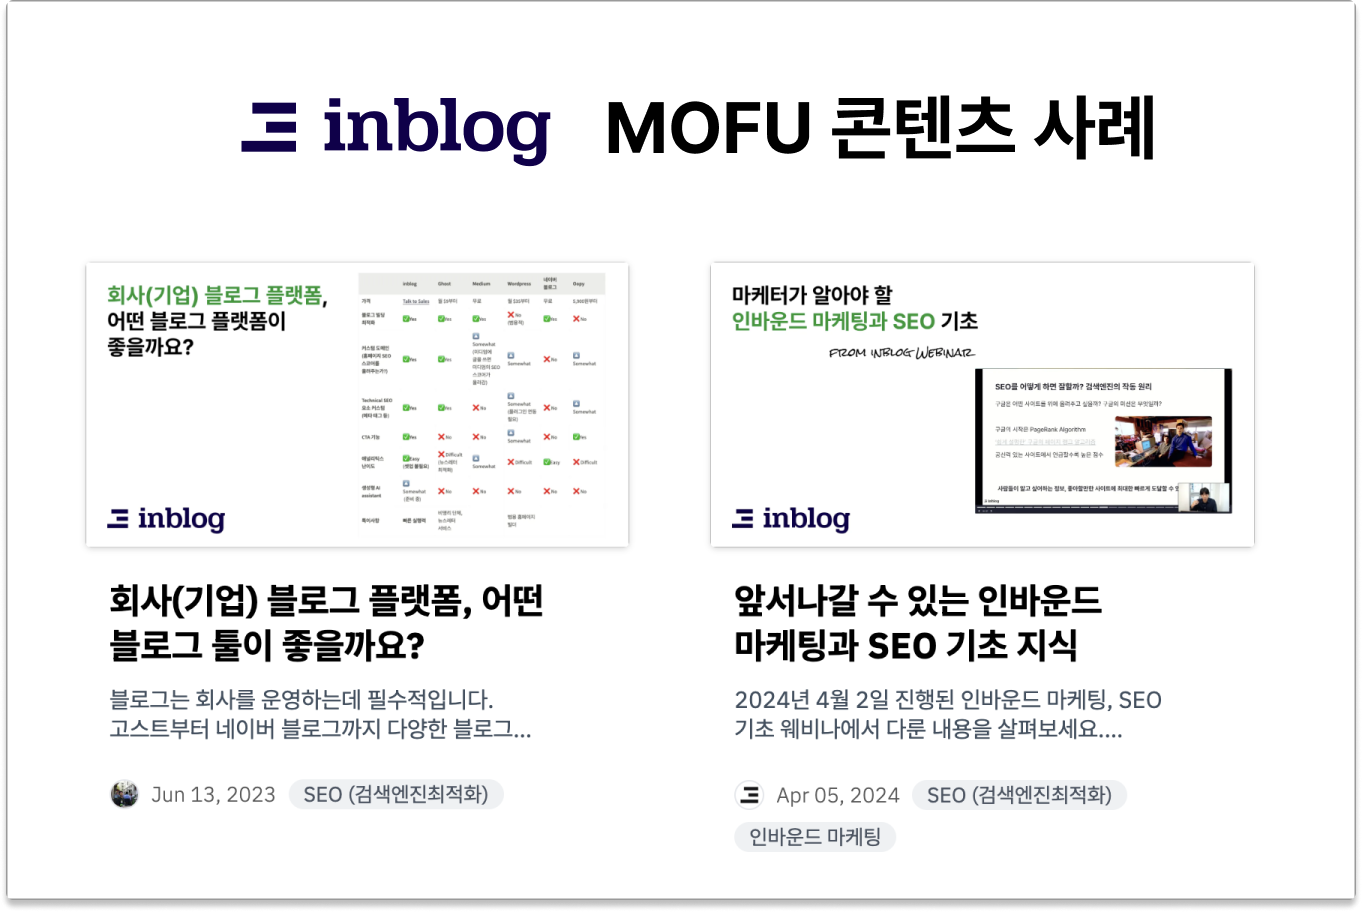 inblog MOFU case